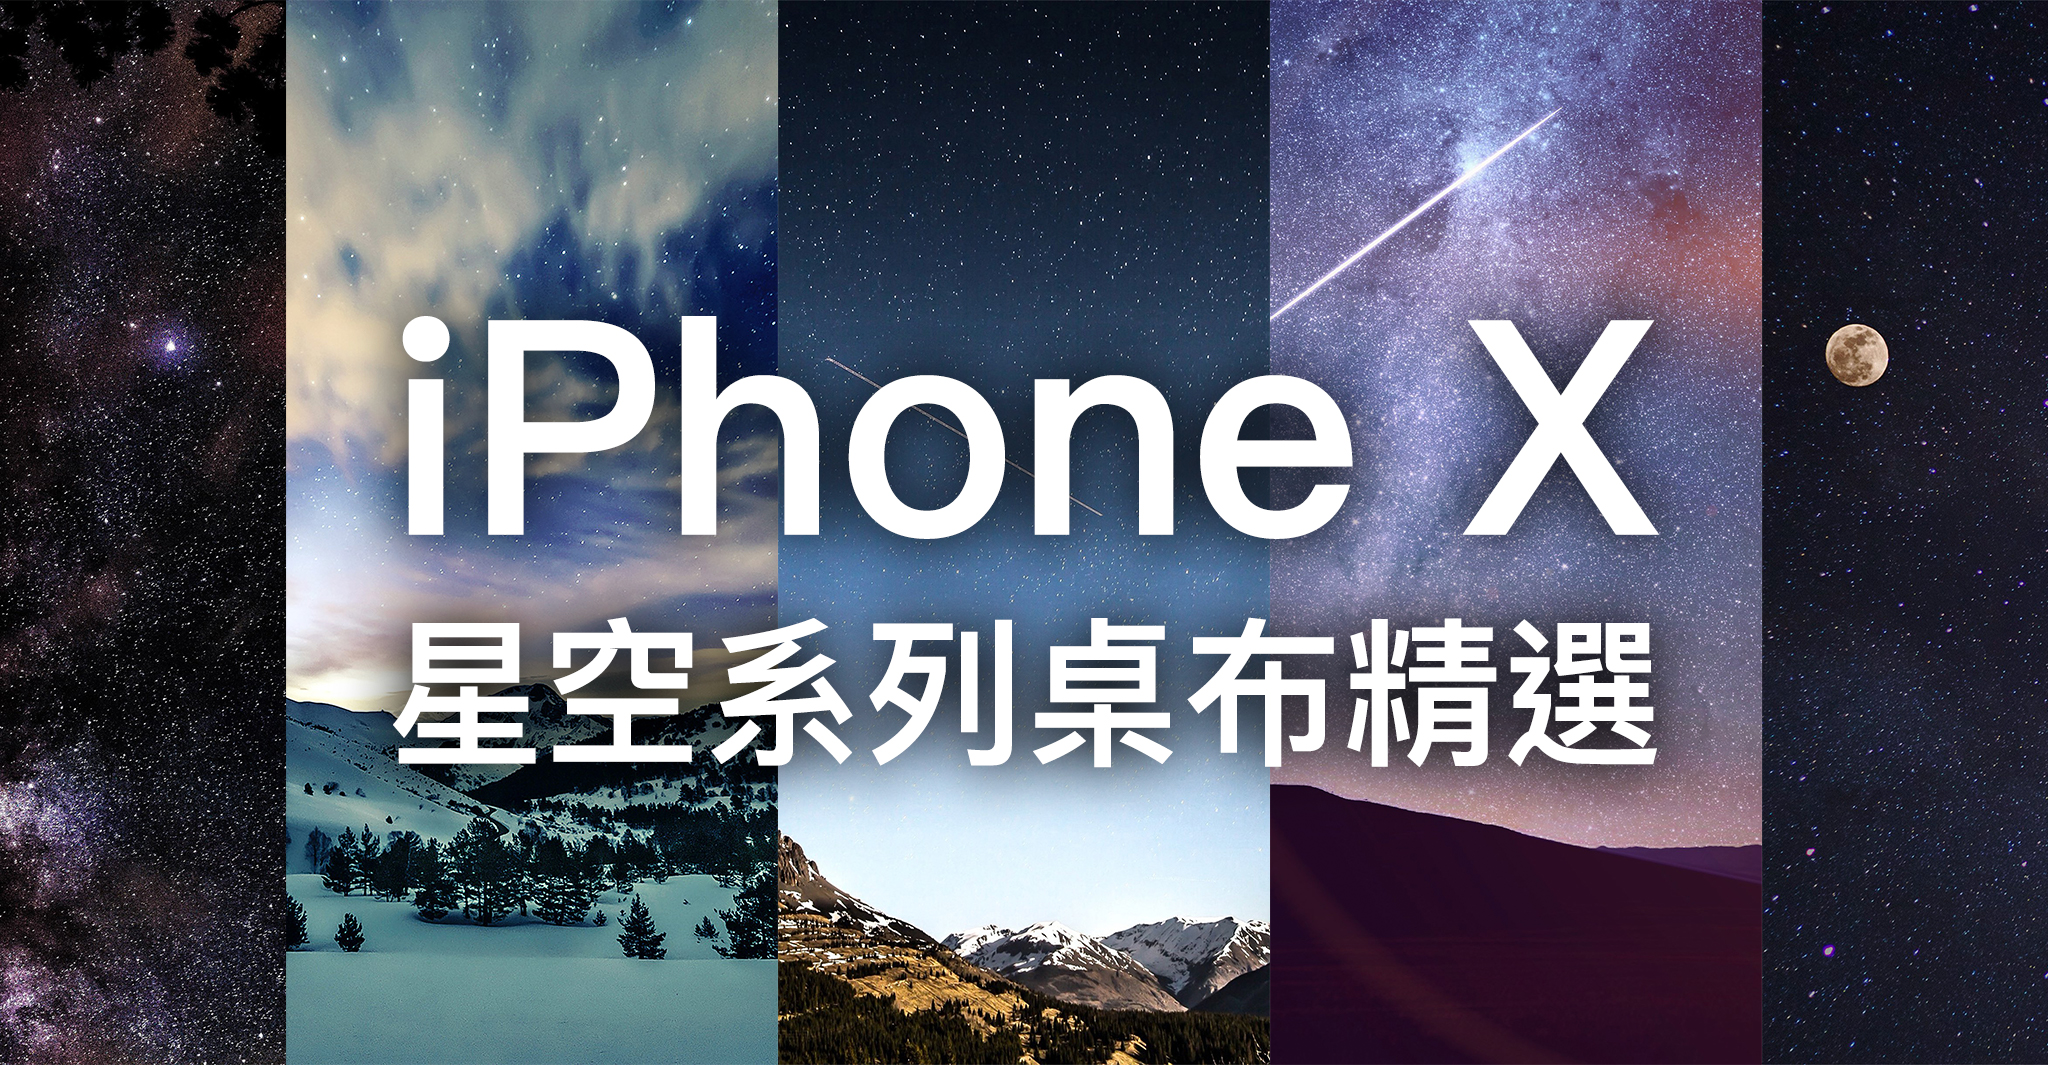 Iphone X 桌布下載 精選 張星空系列iphone X 桌布 蘋果仁 Iphone Ios 好物推薦科技媒體